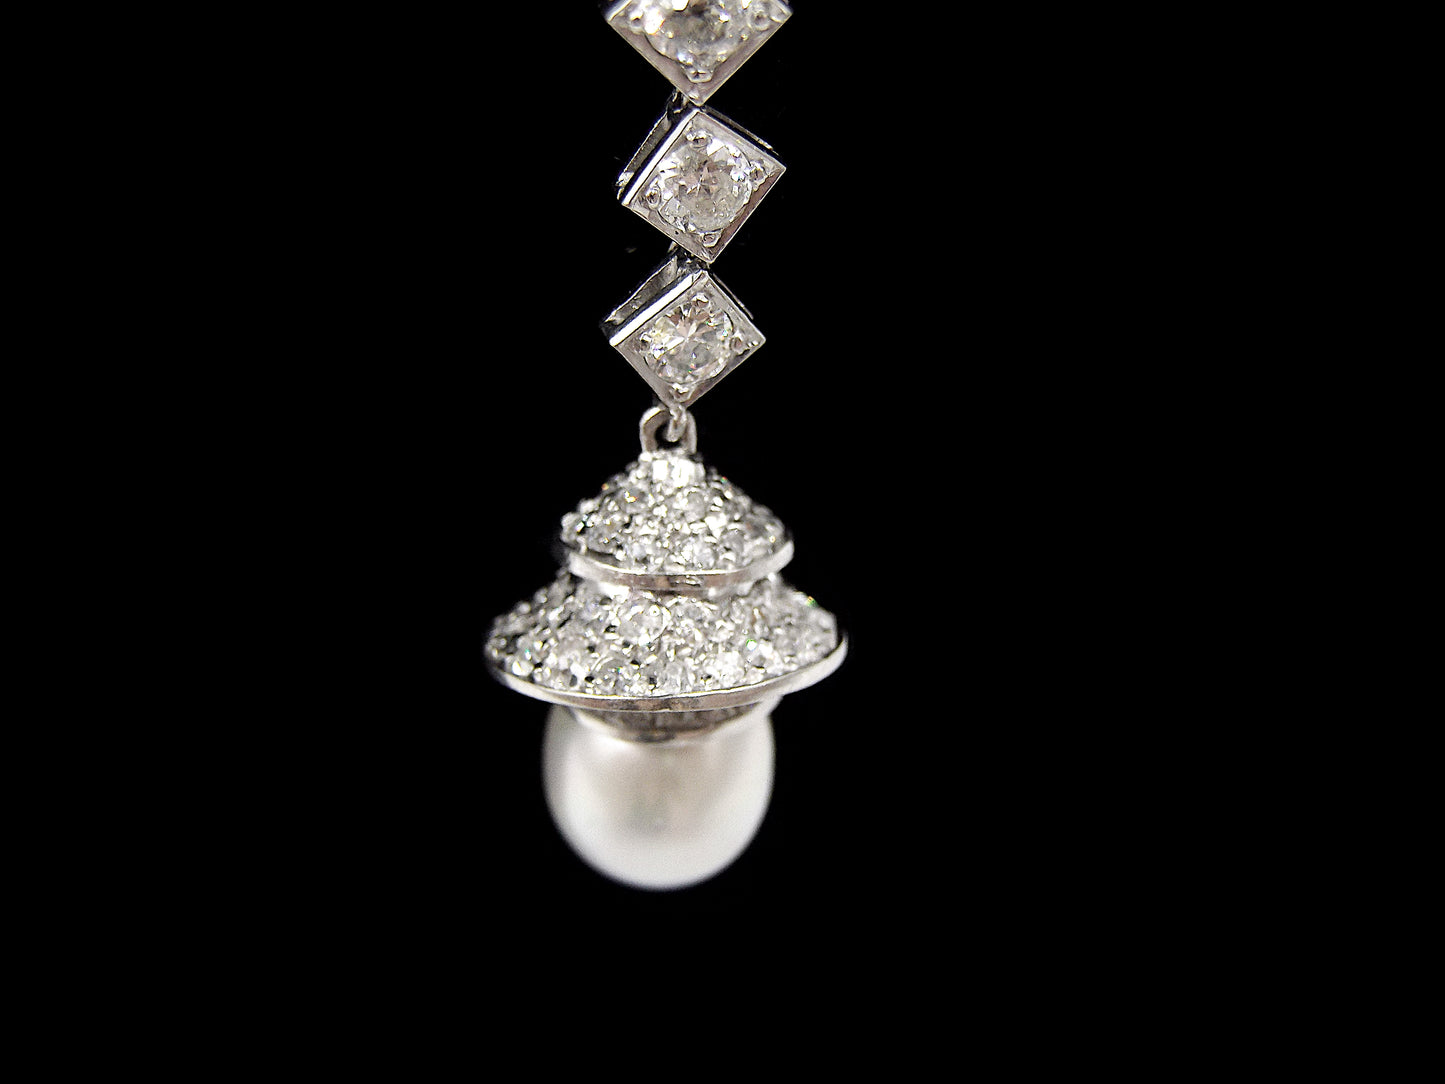 Natural Pearl Diamond Earrings